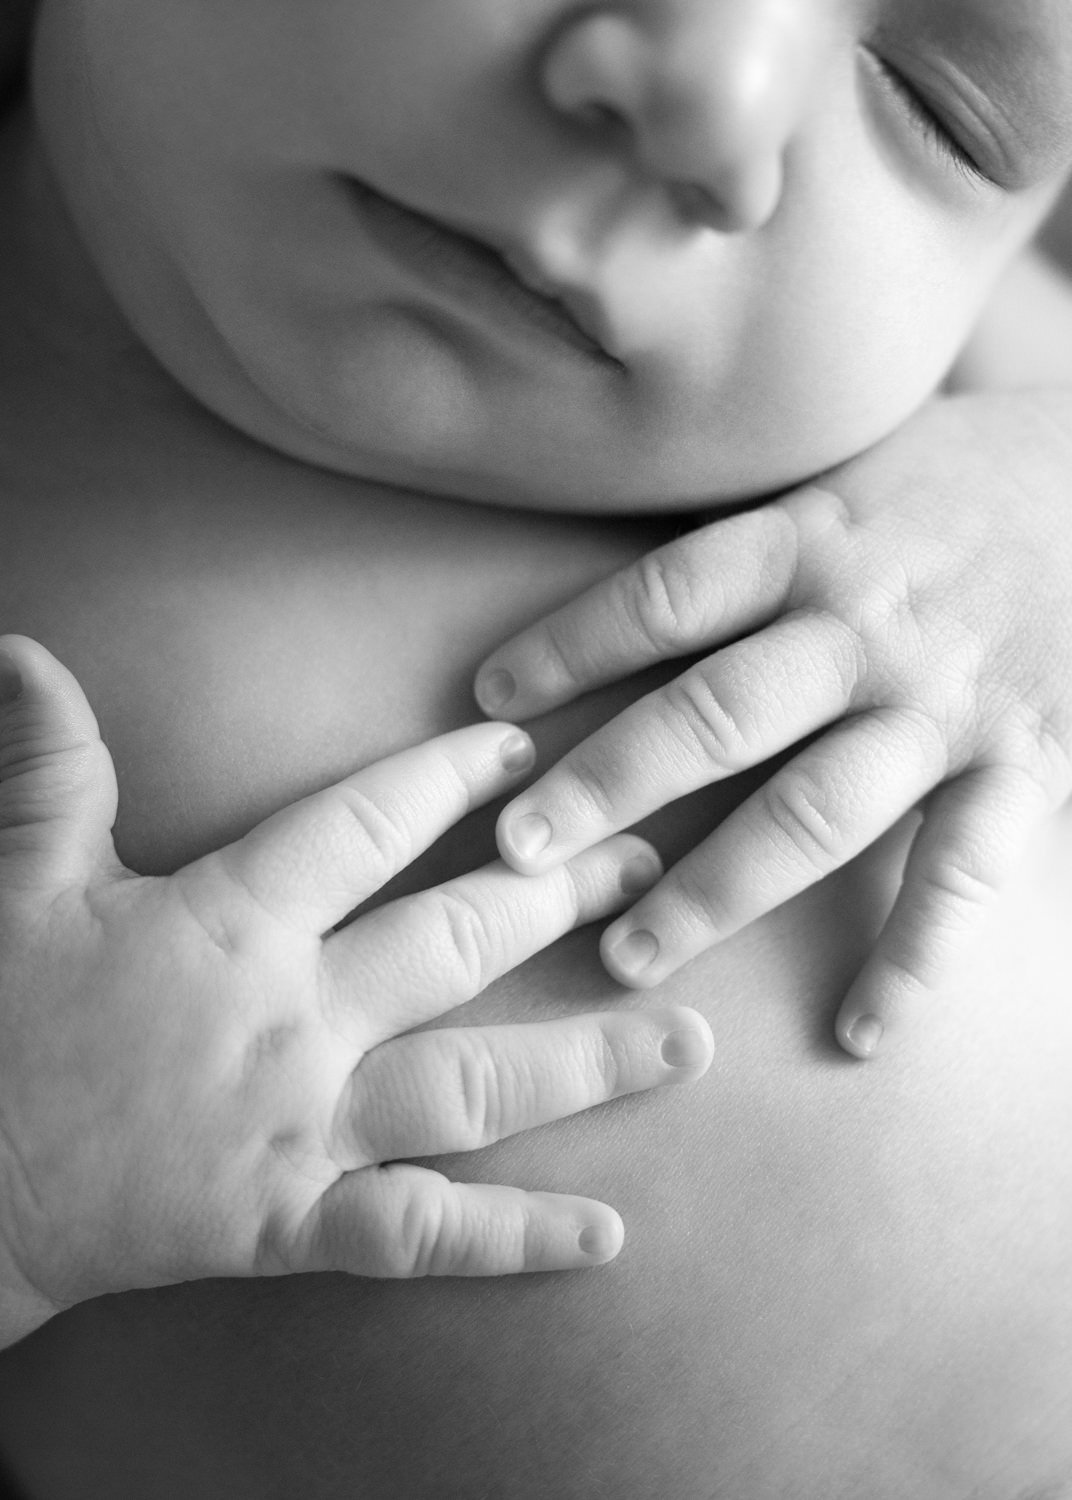 Newborn Hands Close Up 